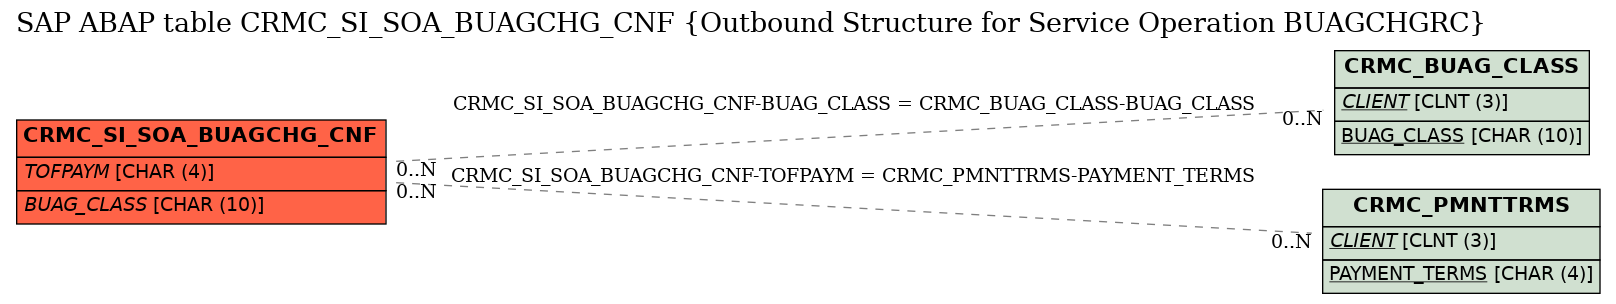 E-R Diagram for table CRMC_SI_SOA_BUAGCHG_CNF (Outbound Structure for Service Operation BUAGCHGRC)